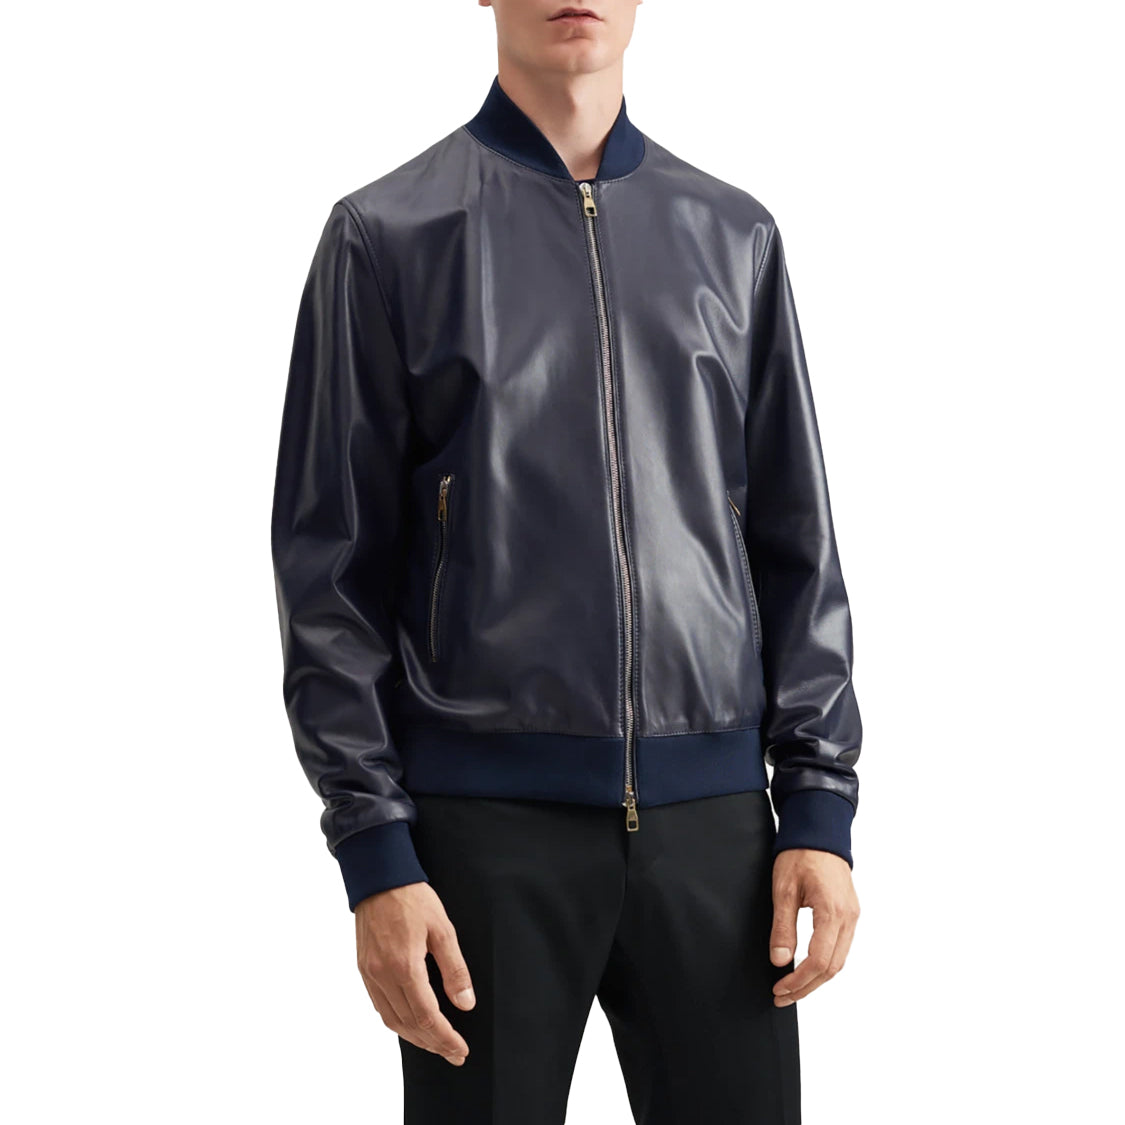 Blue Bomber Leather Jacket for Men - Mika – Tango.